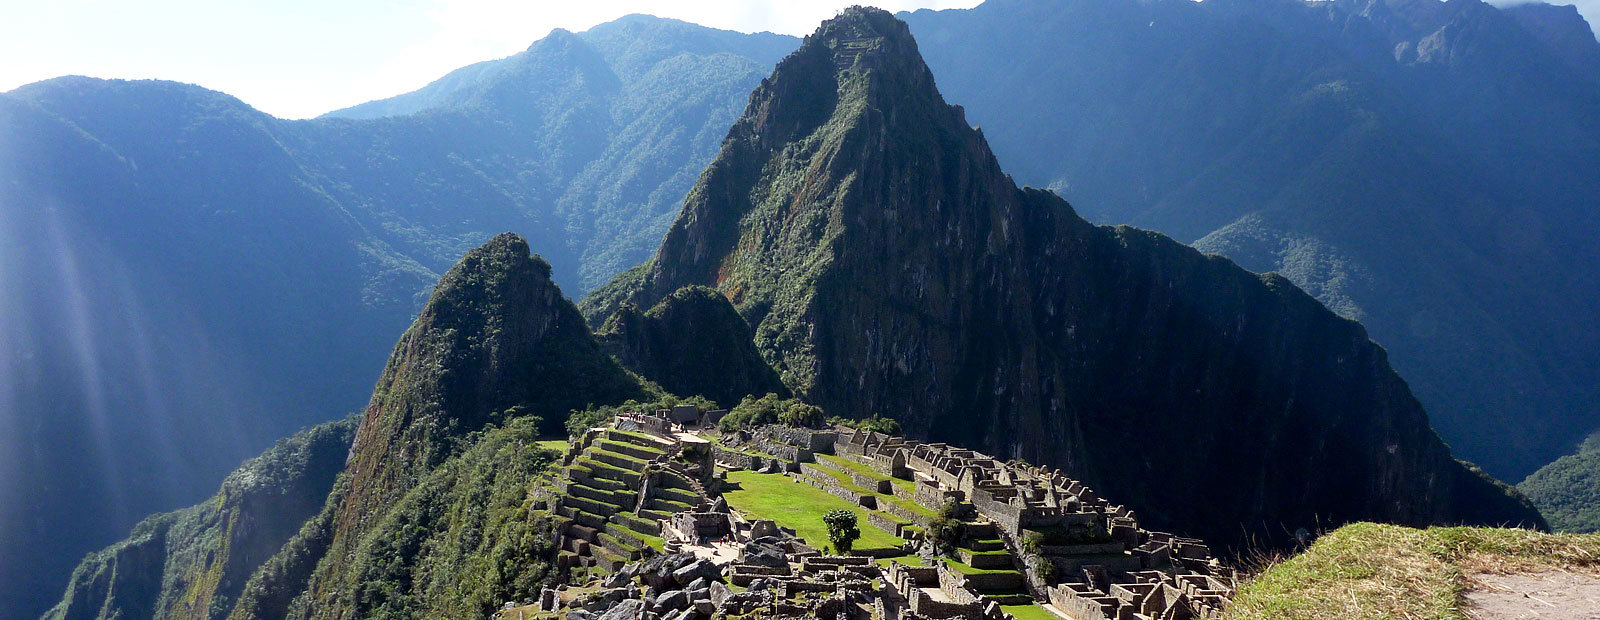 Inkastaden Machu Picchu